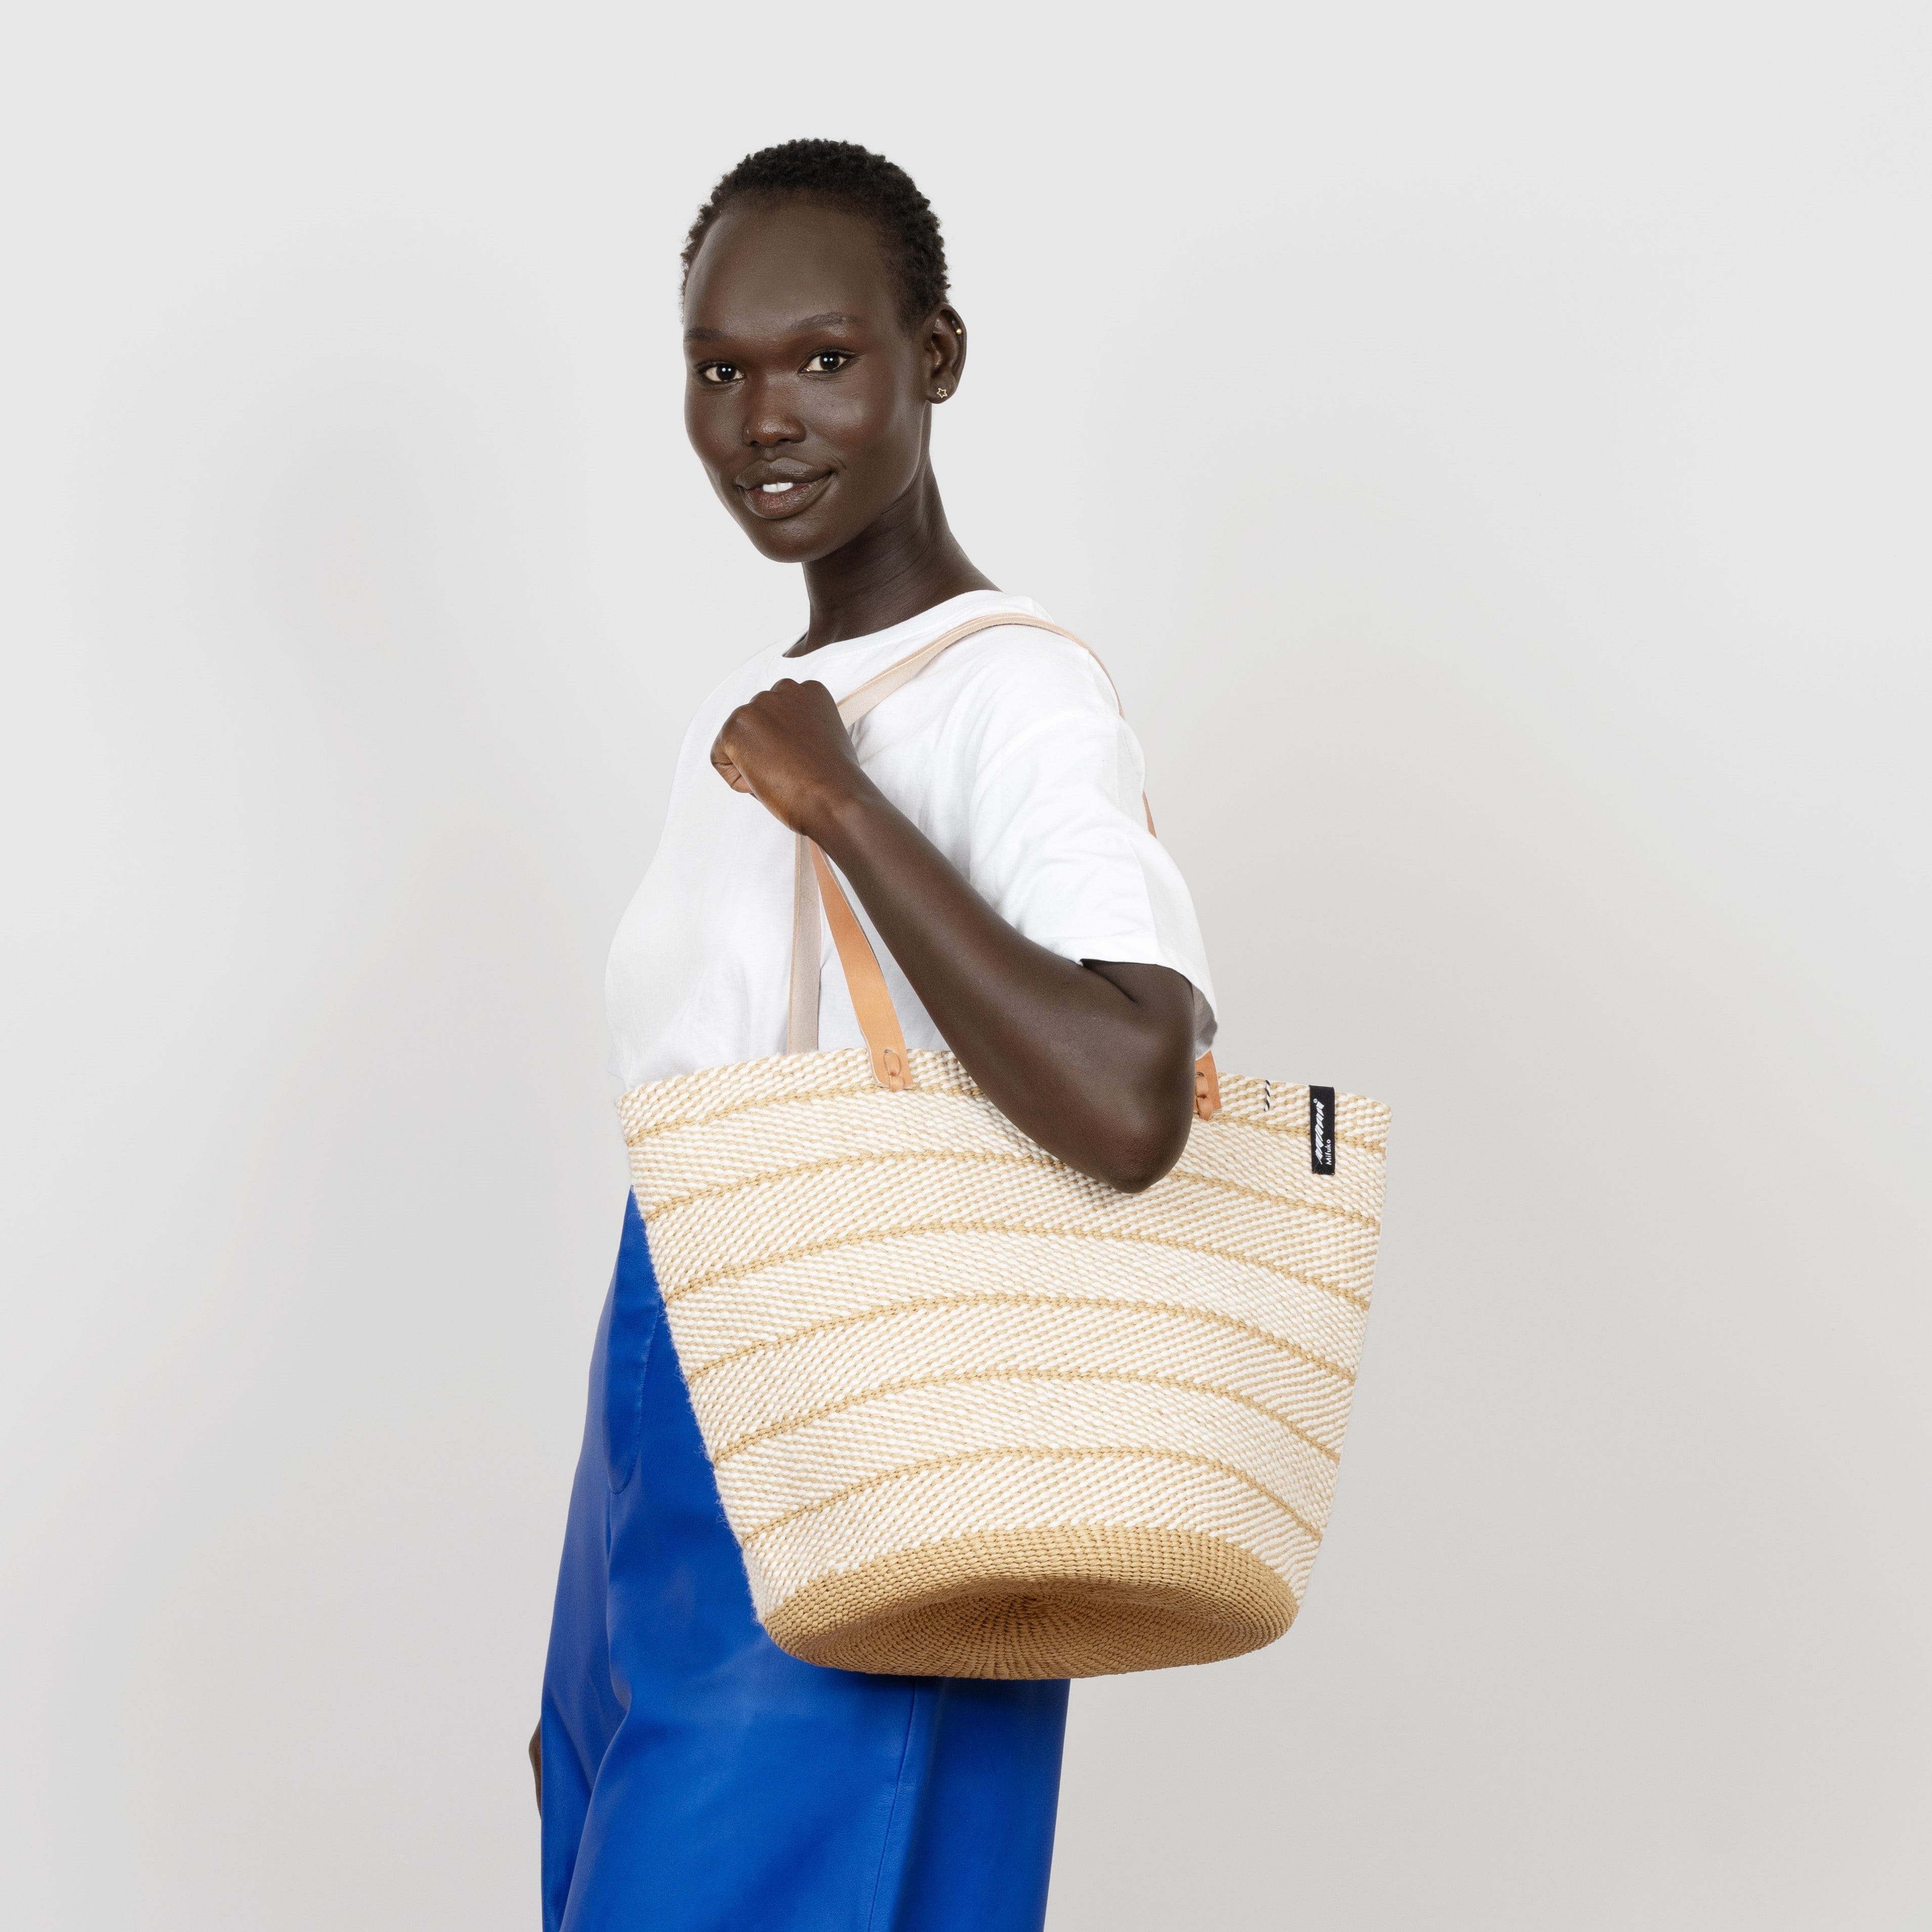 Mifuko Wool and paper Shopper basket Pamba shopper basket | Brown twill weave M